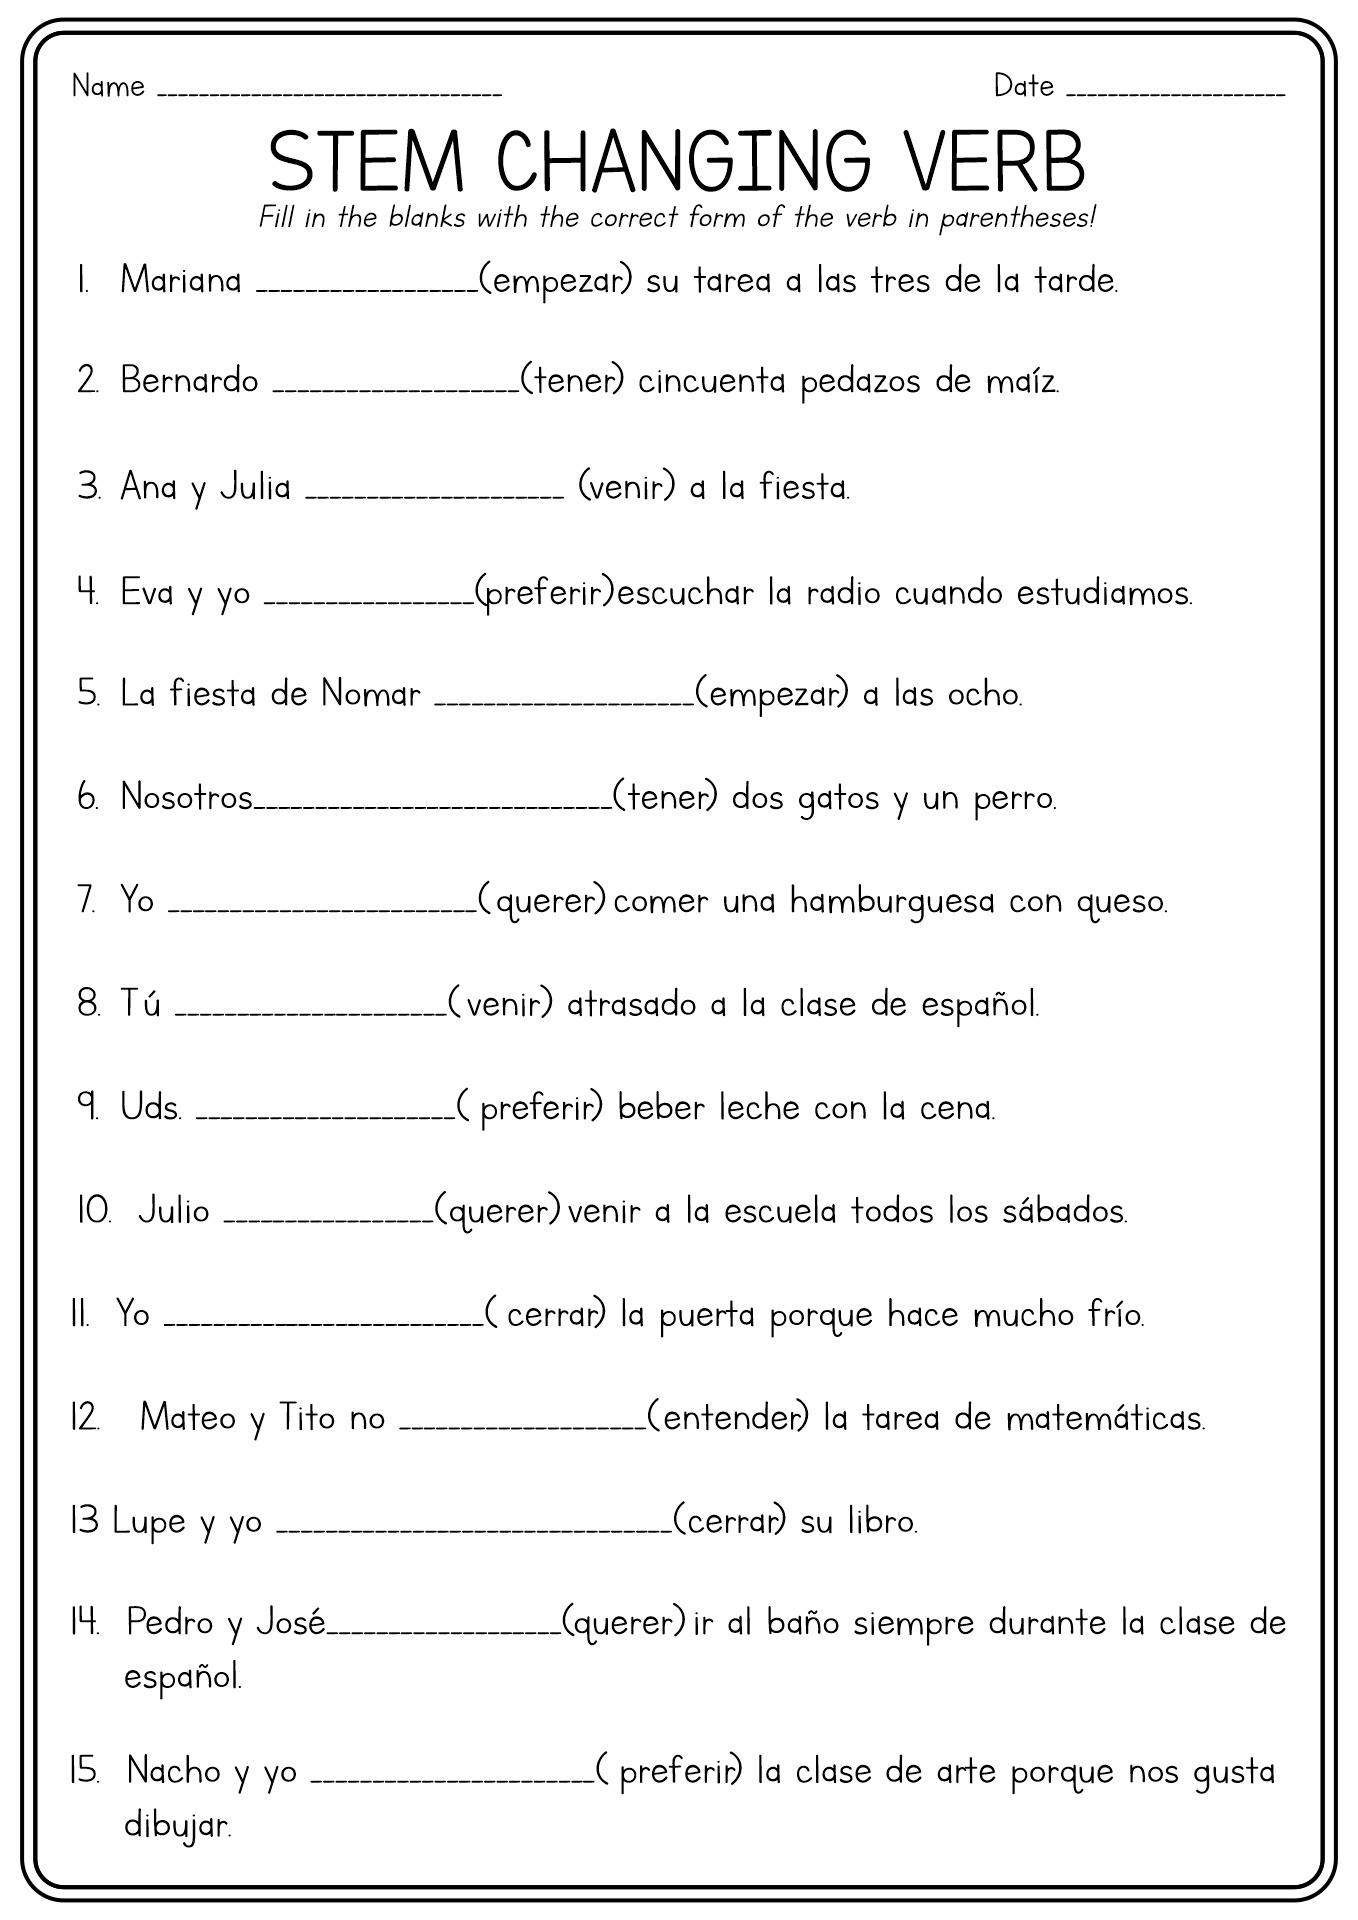 Present Tense Stem Changing Verbs Worksheets Image